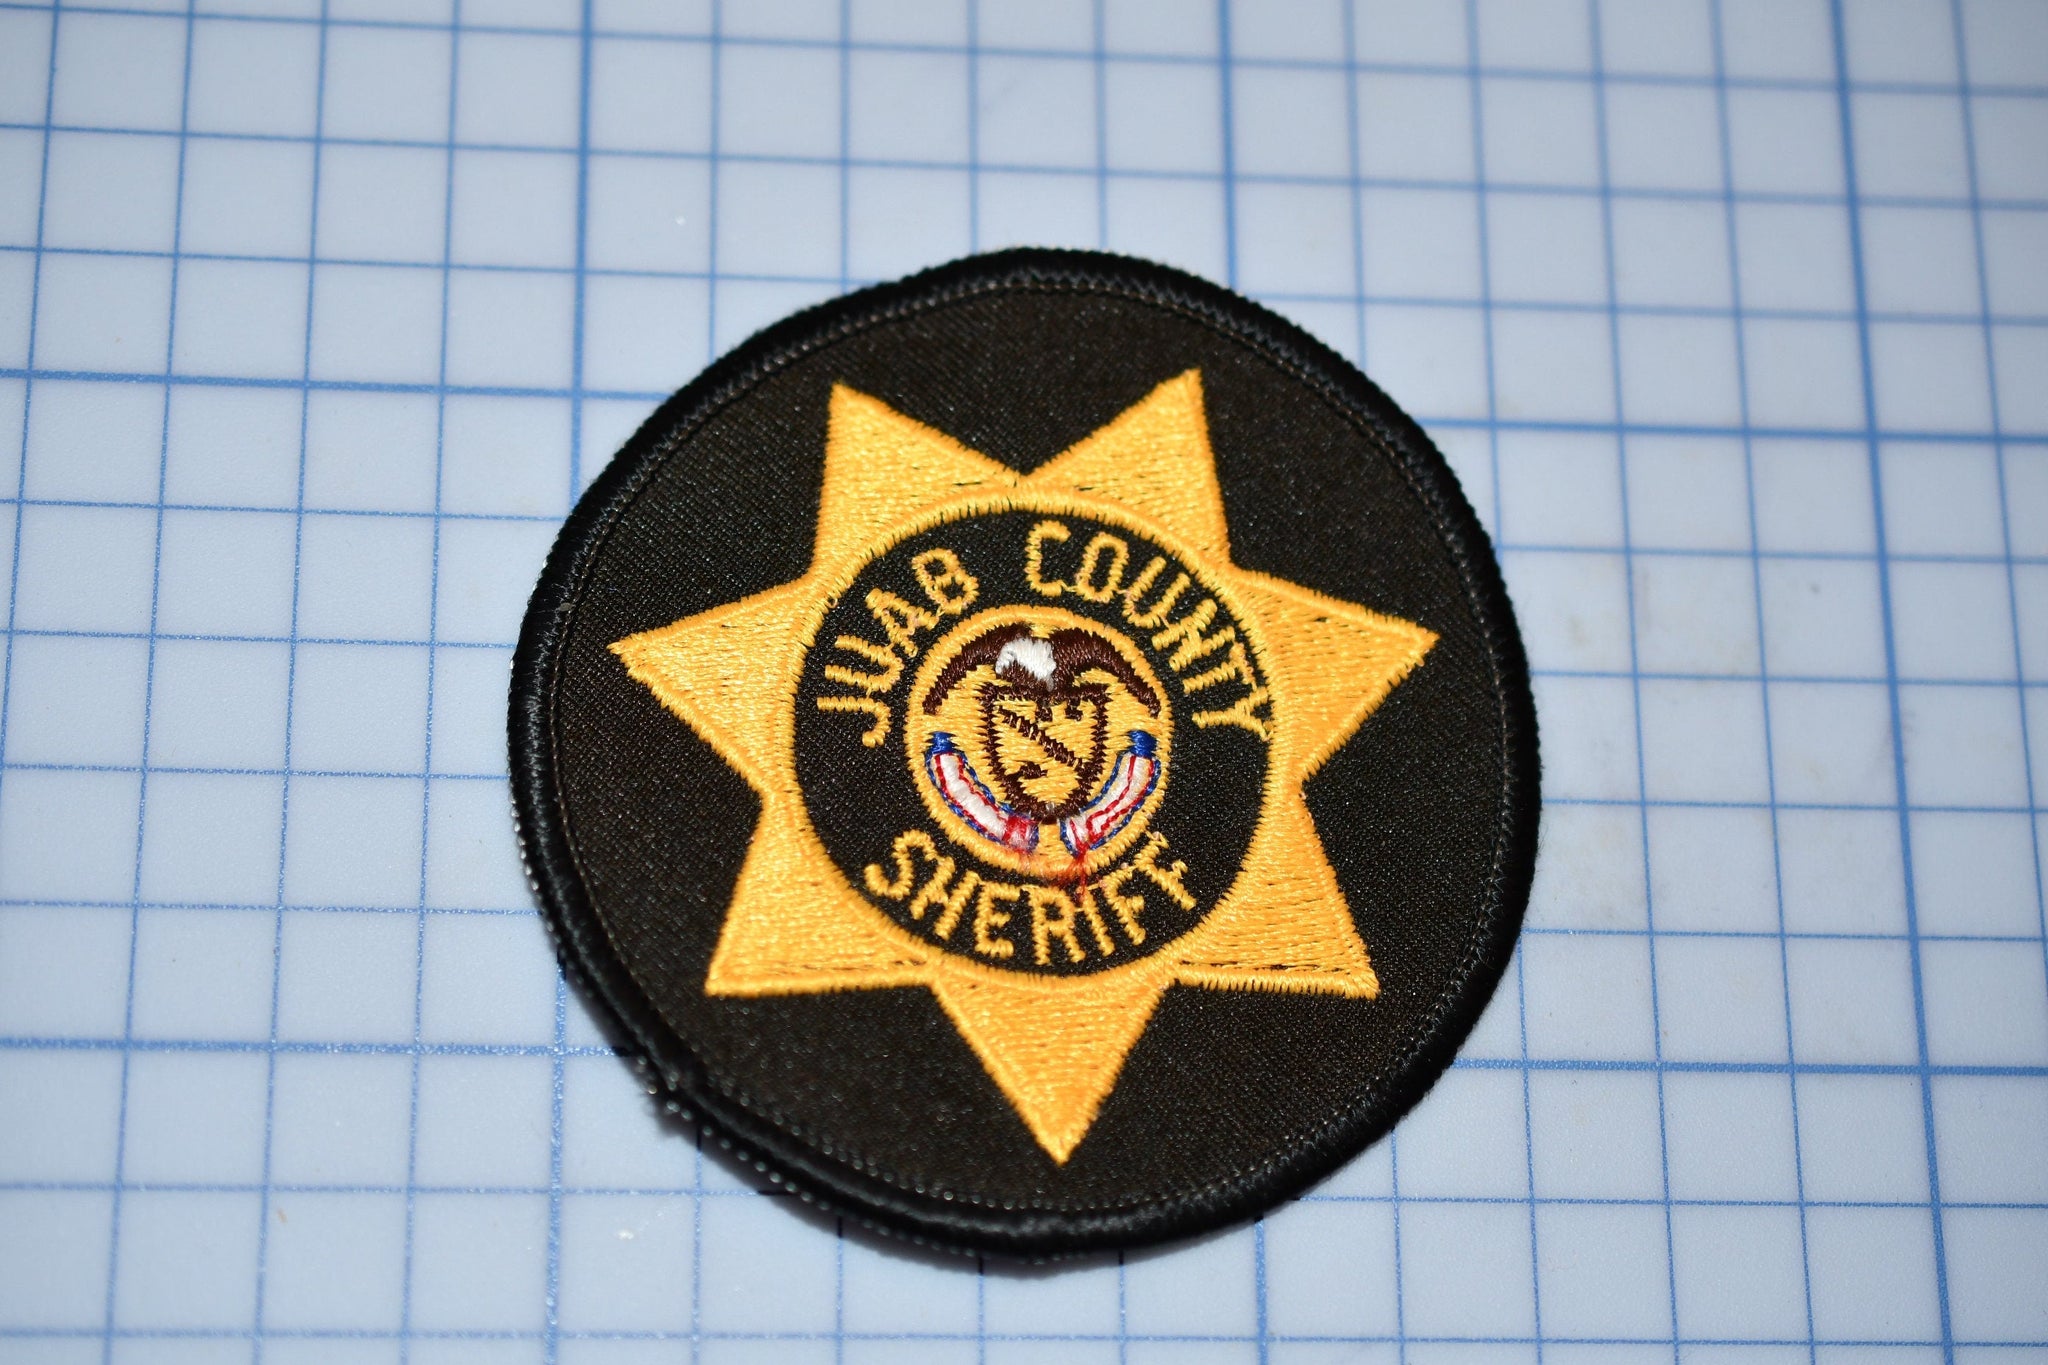 Juab County Utah Sheriff Patch (S4-281)